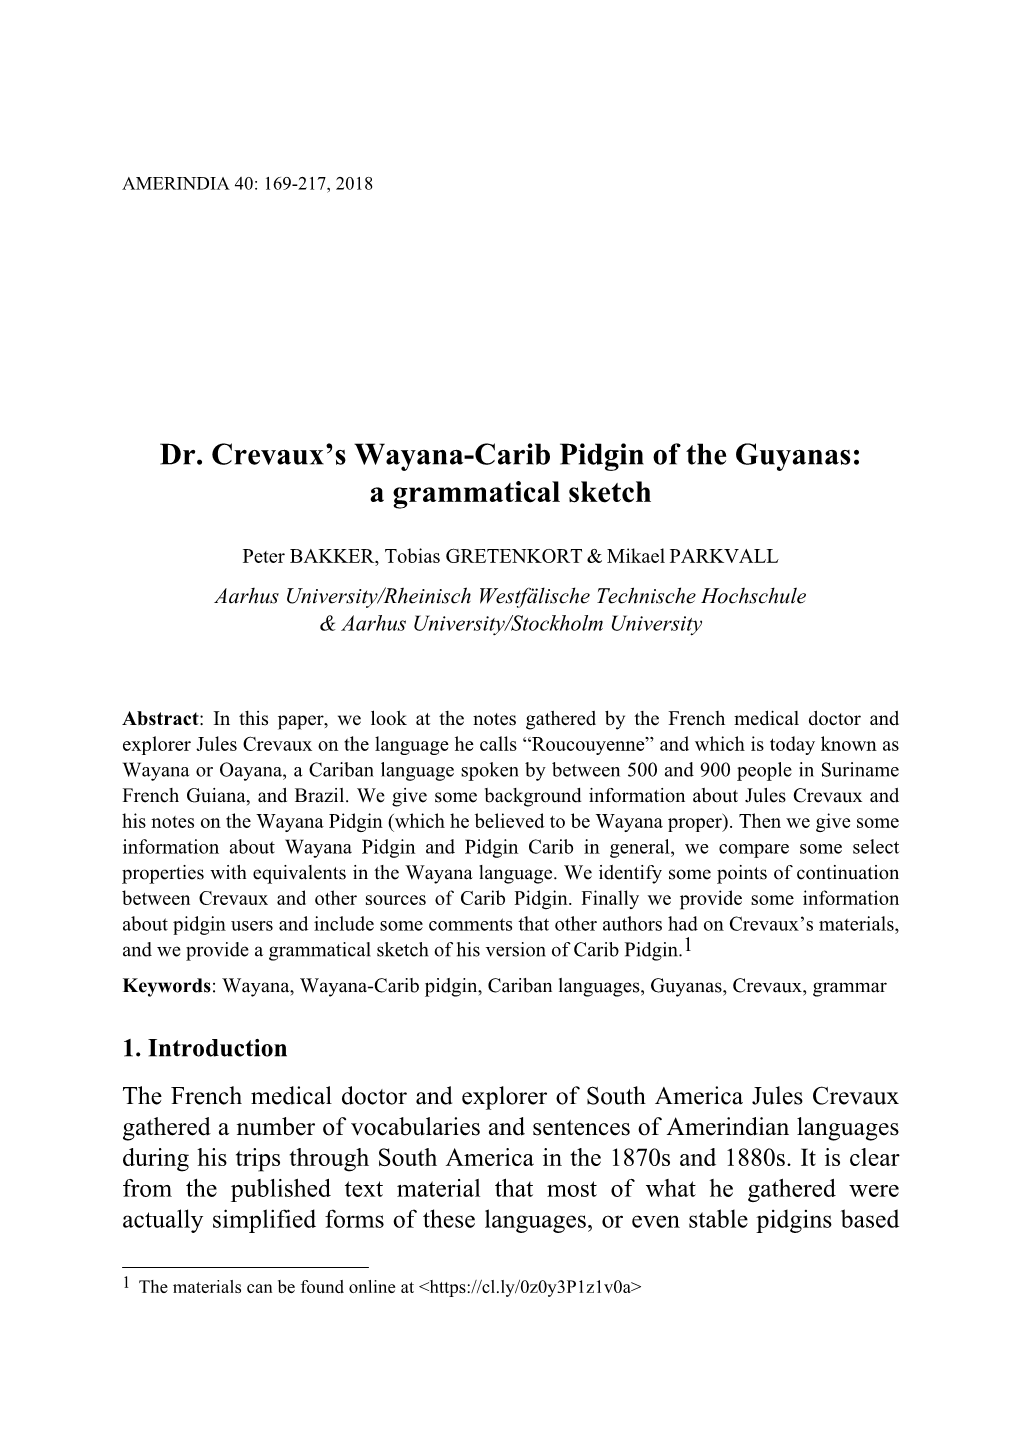 Dr. Crevaux's Wayana-Carib Pidgin of the Guyanas